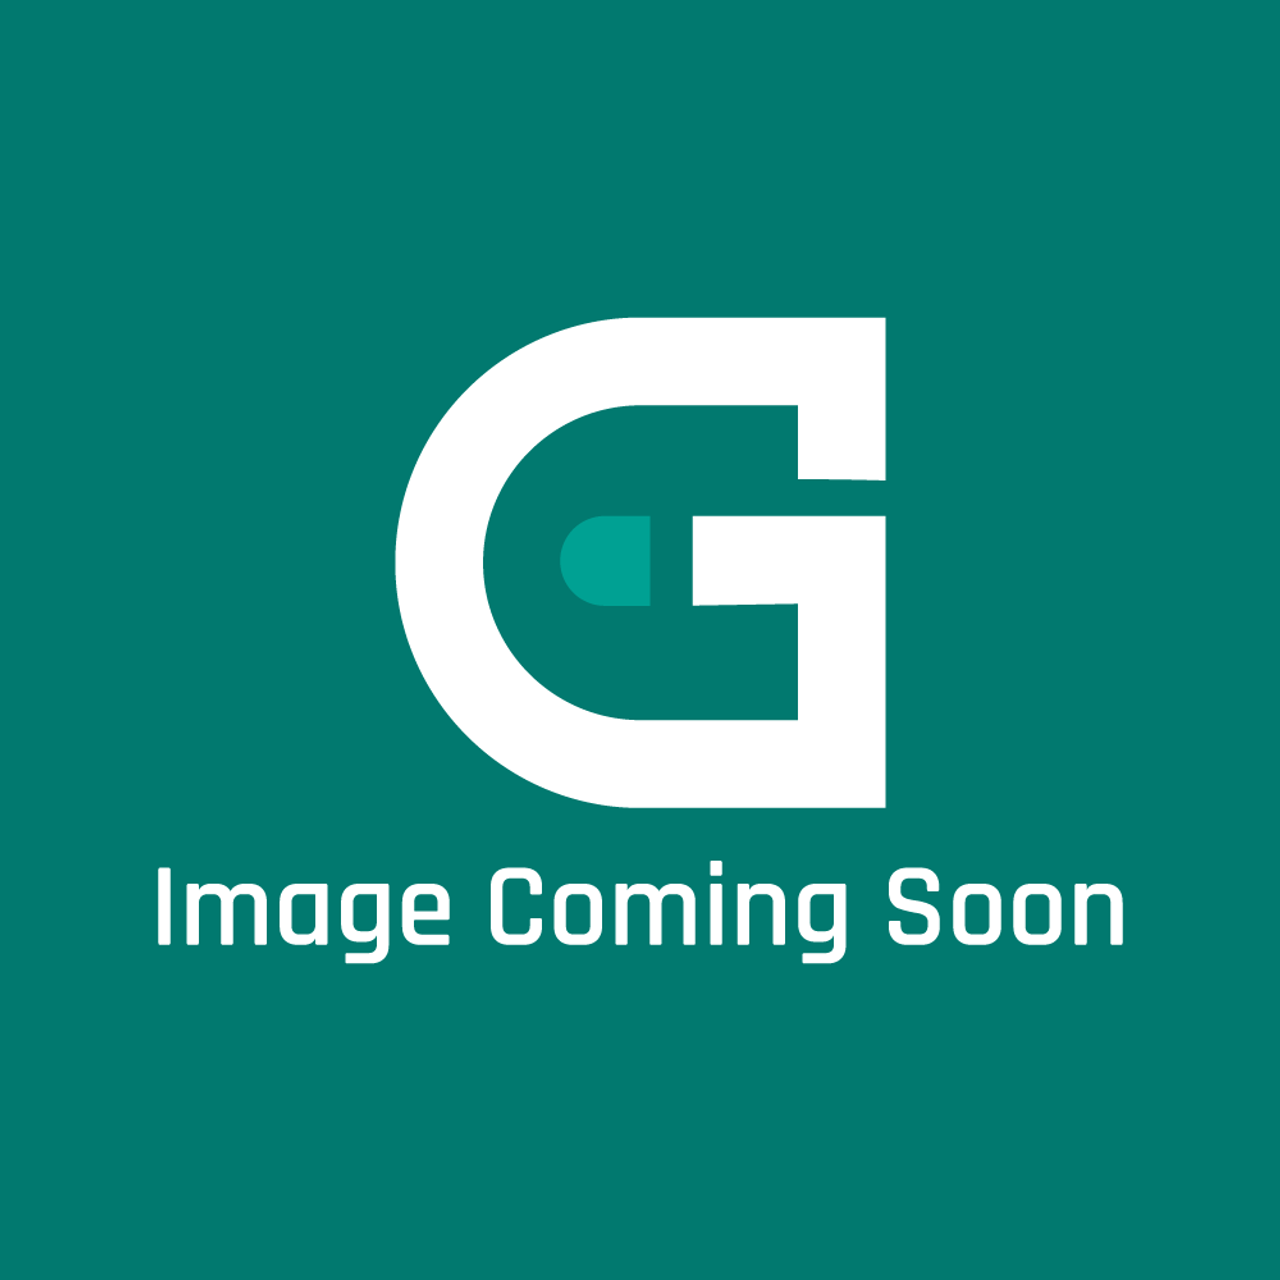 GE Appliances WR02X38930 - Filter Access Door - Image Coming Soon!